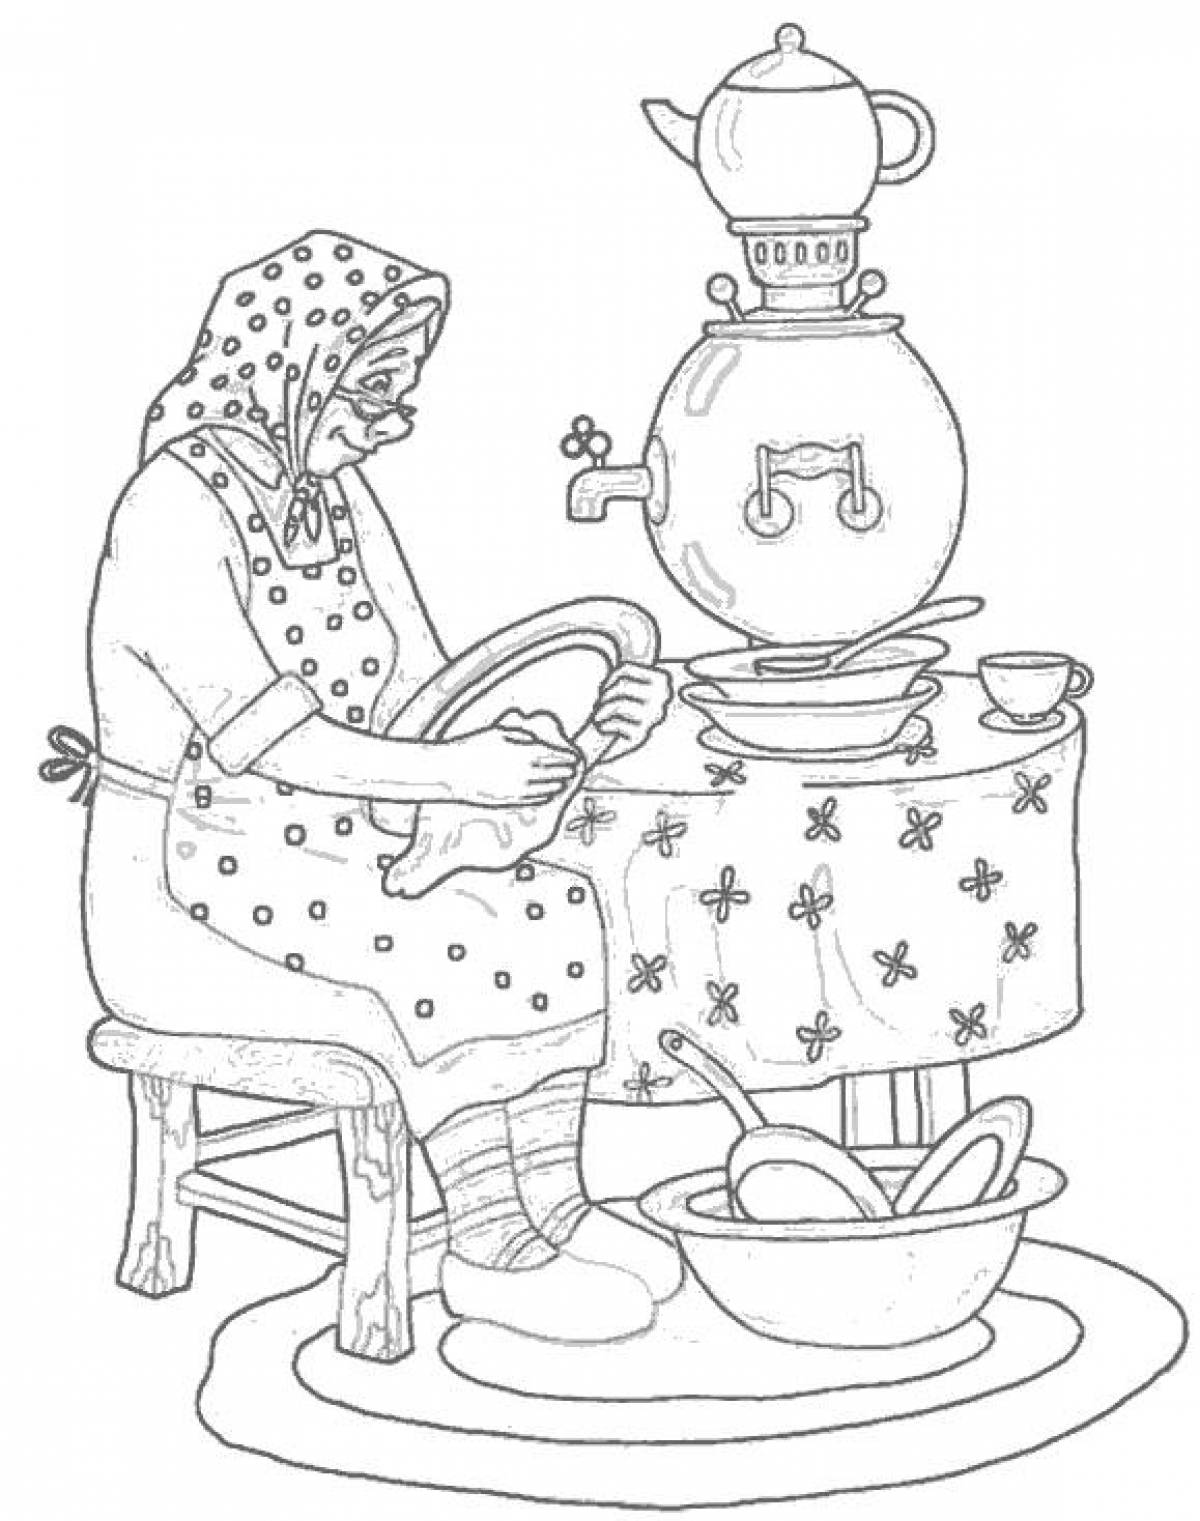 Grandmother with a samovar